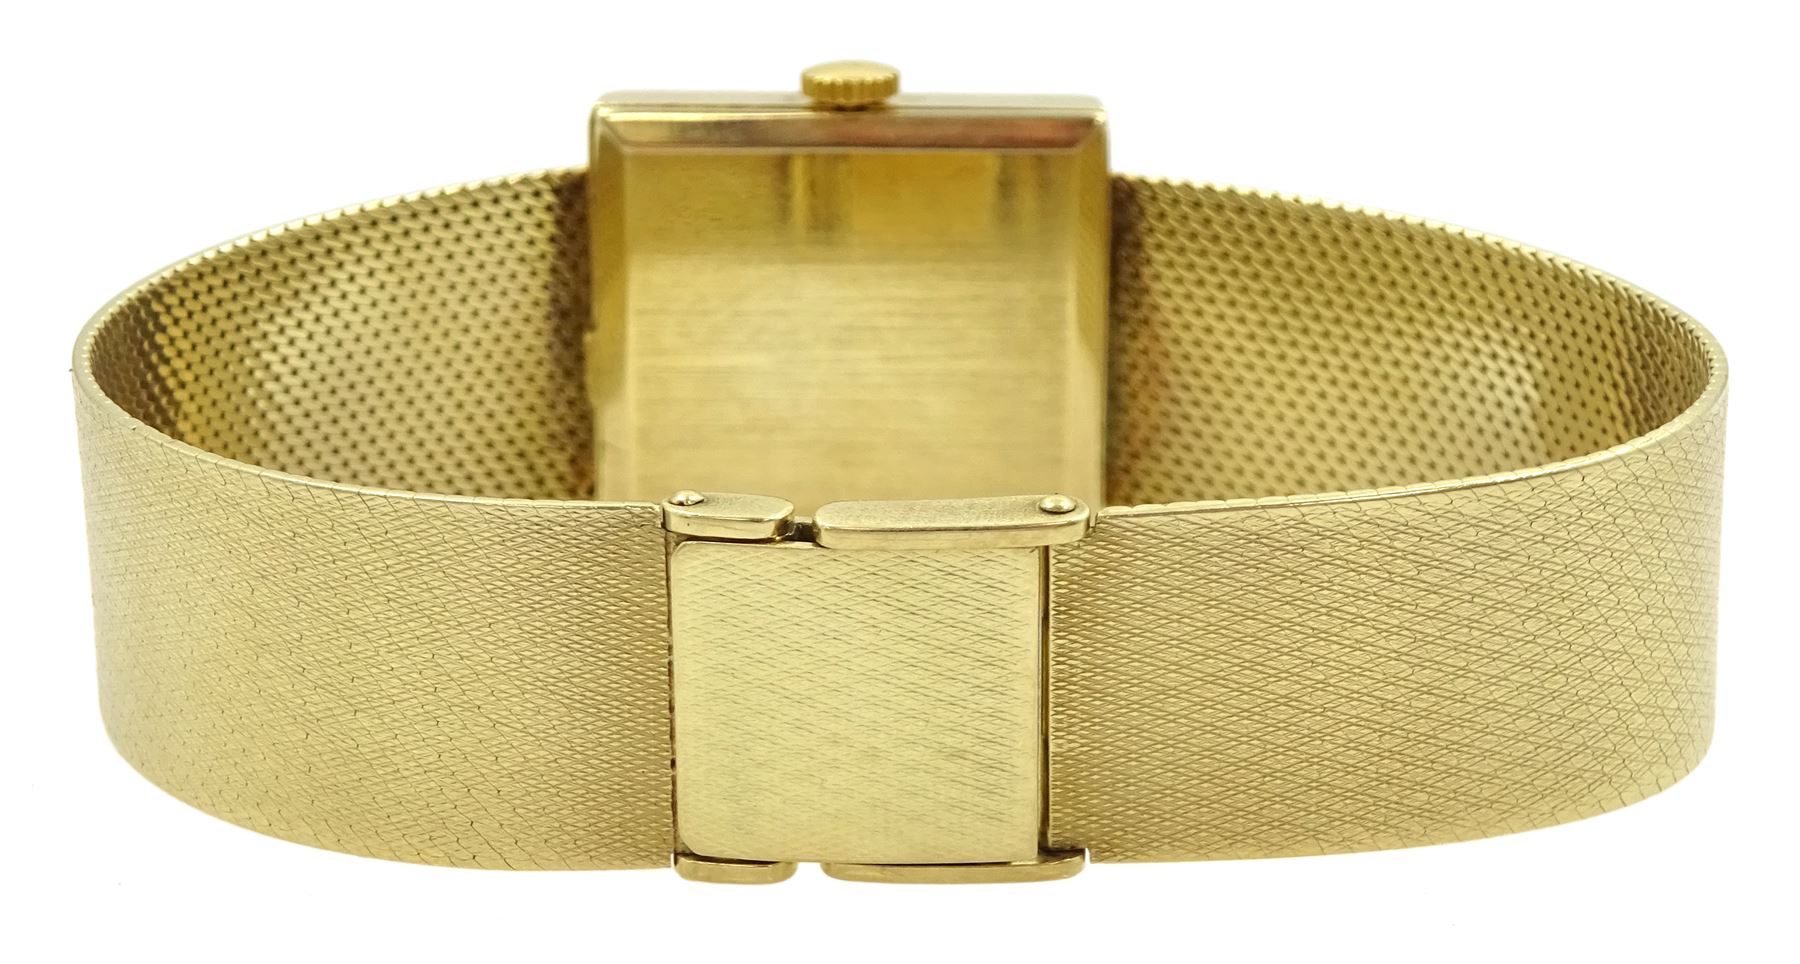 Longines gentleman's 14ct gold manual wind wristwatch - Image 2 of 2